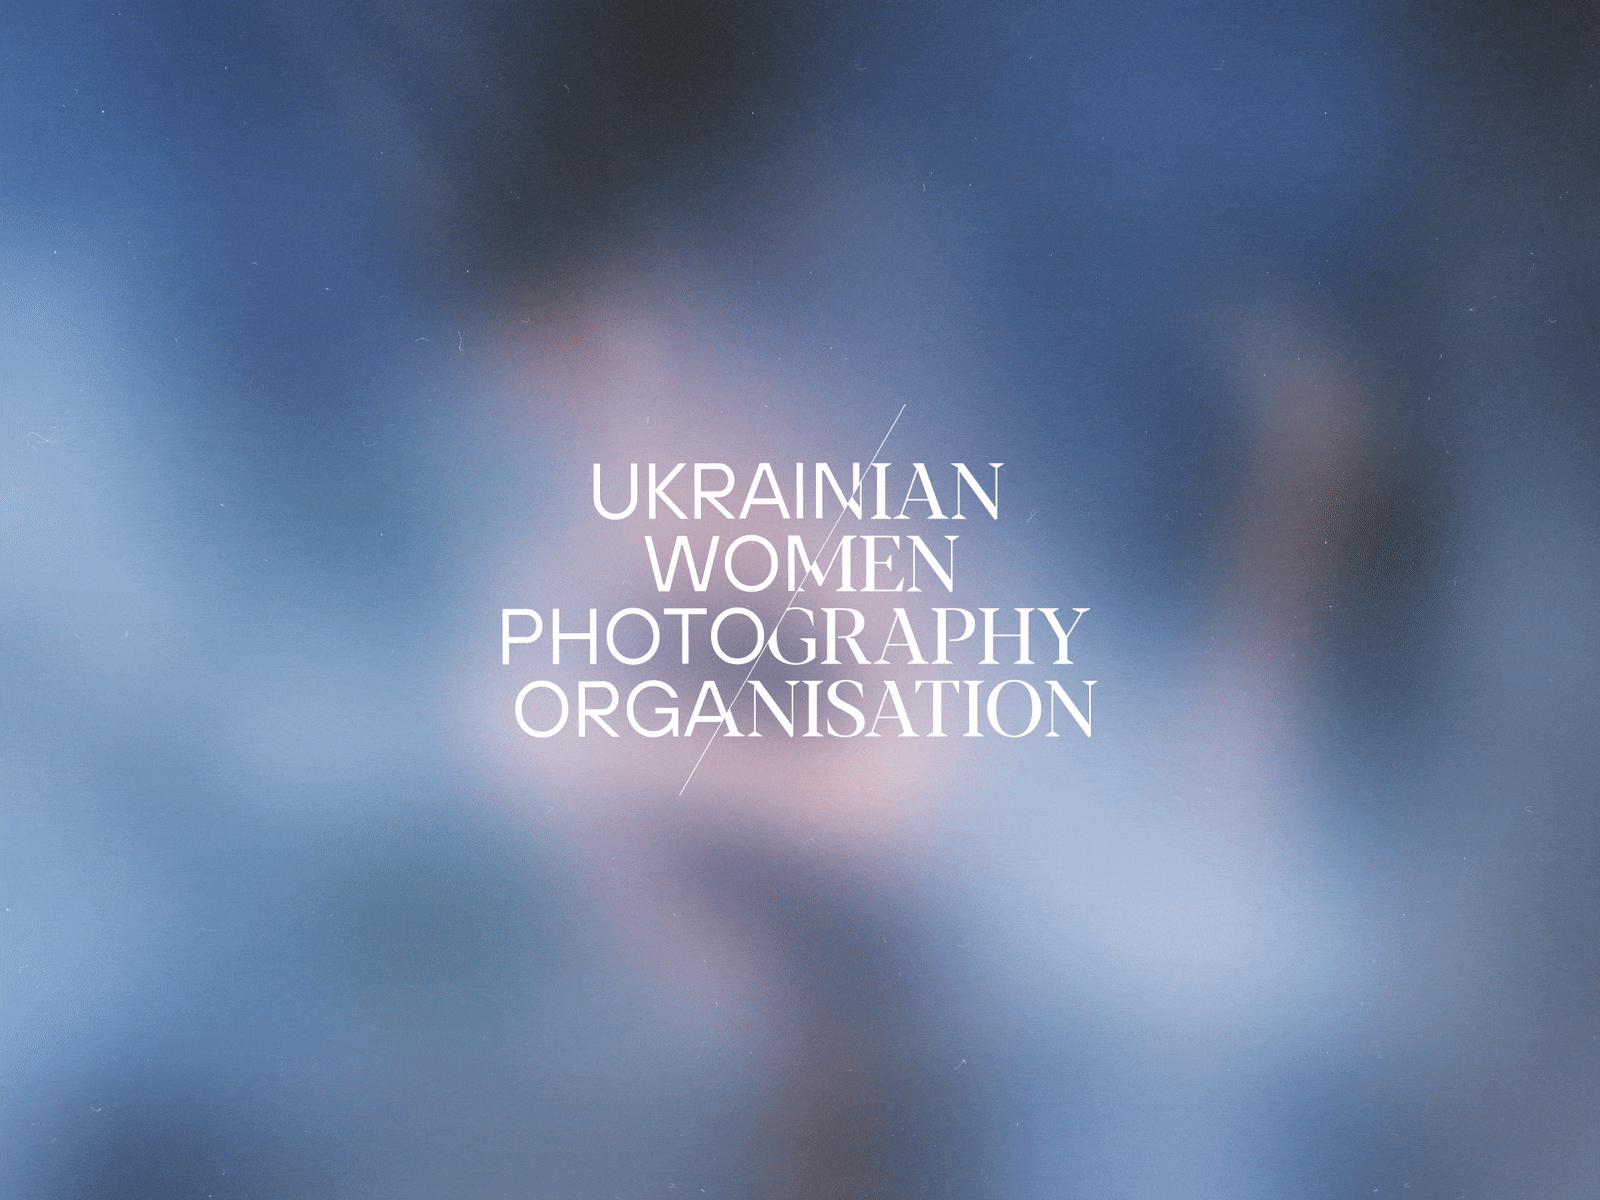 Full logo for Ukrainian Women Photography Organization